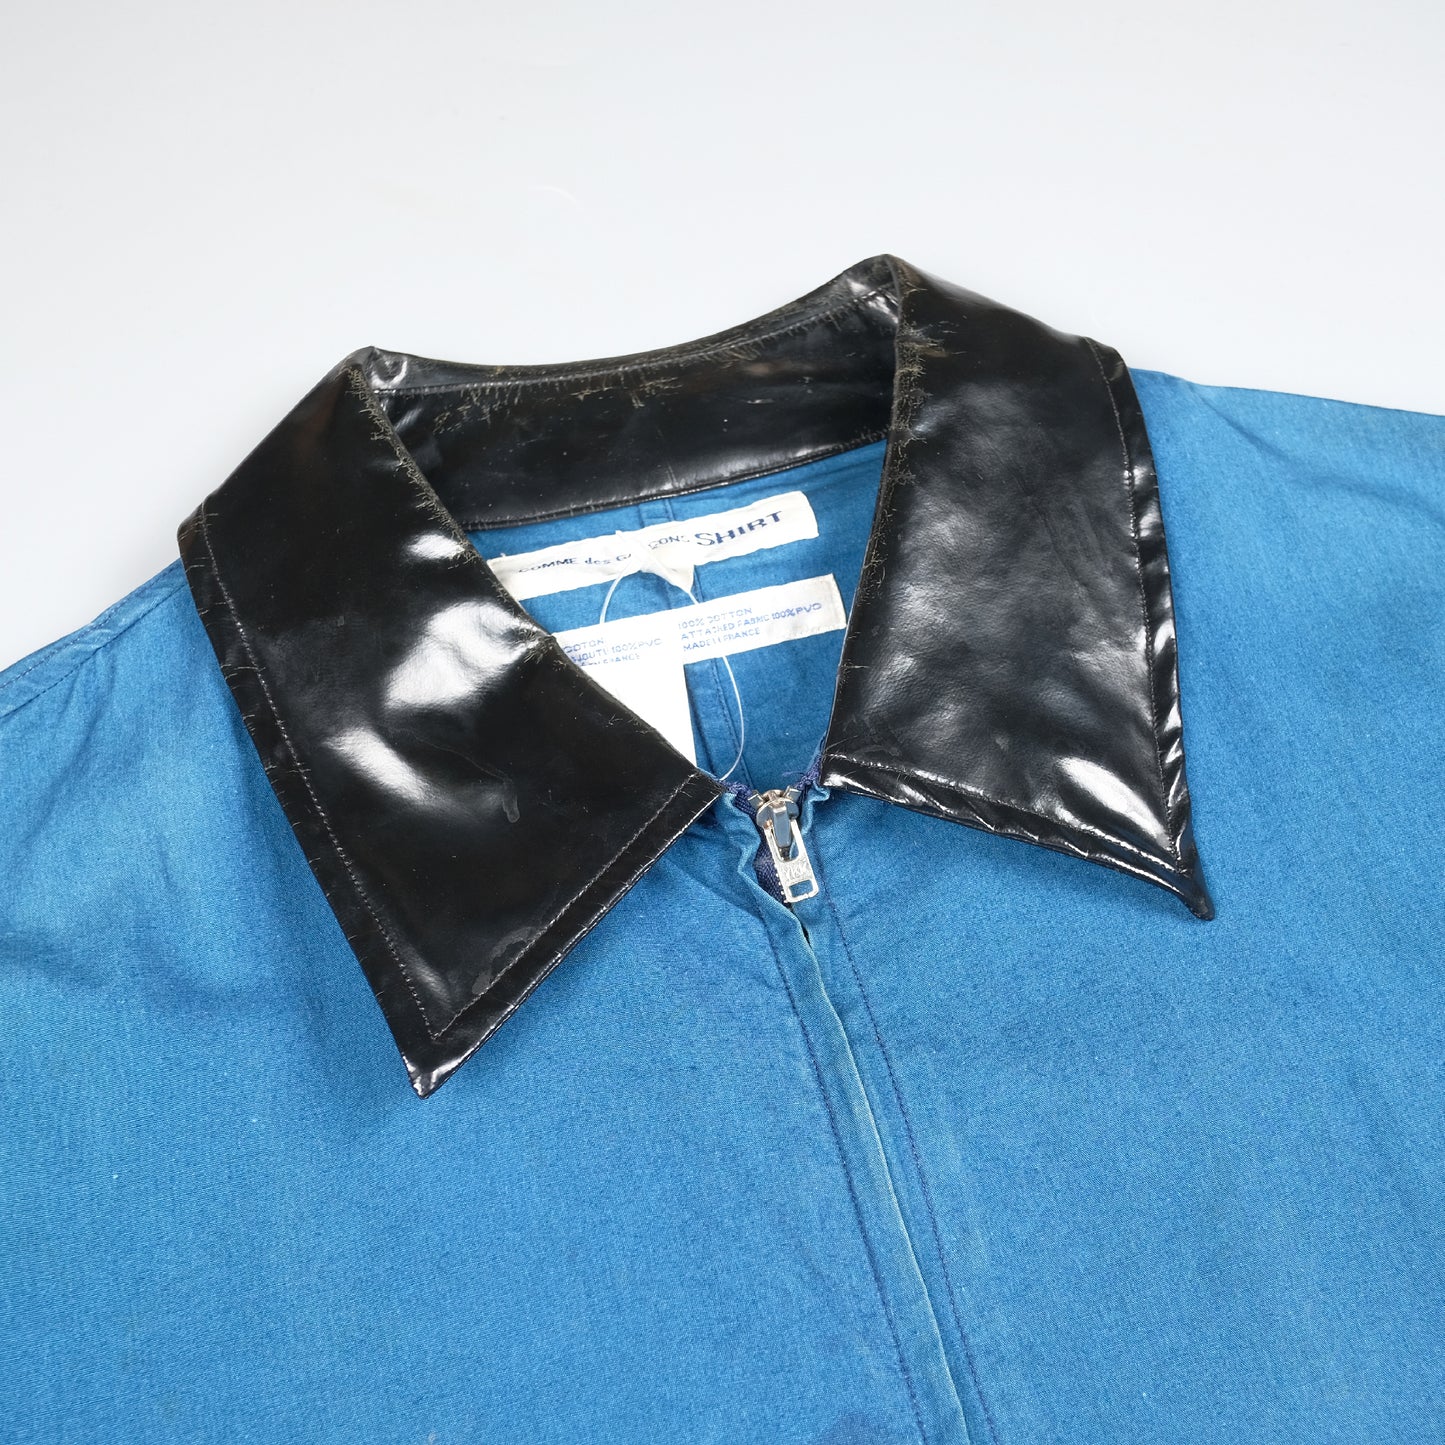 CDG Shirt Black Collared Blue Zip Up